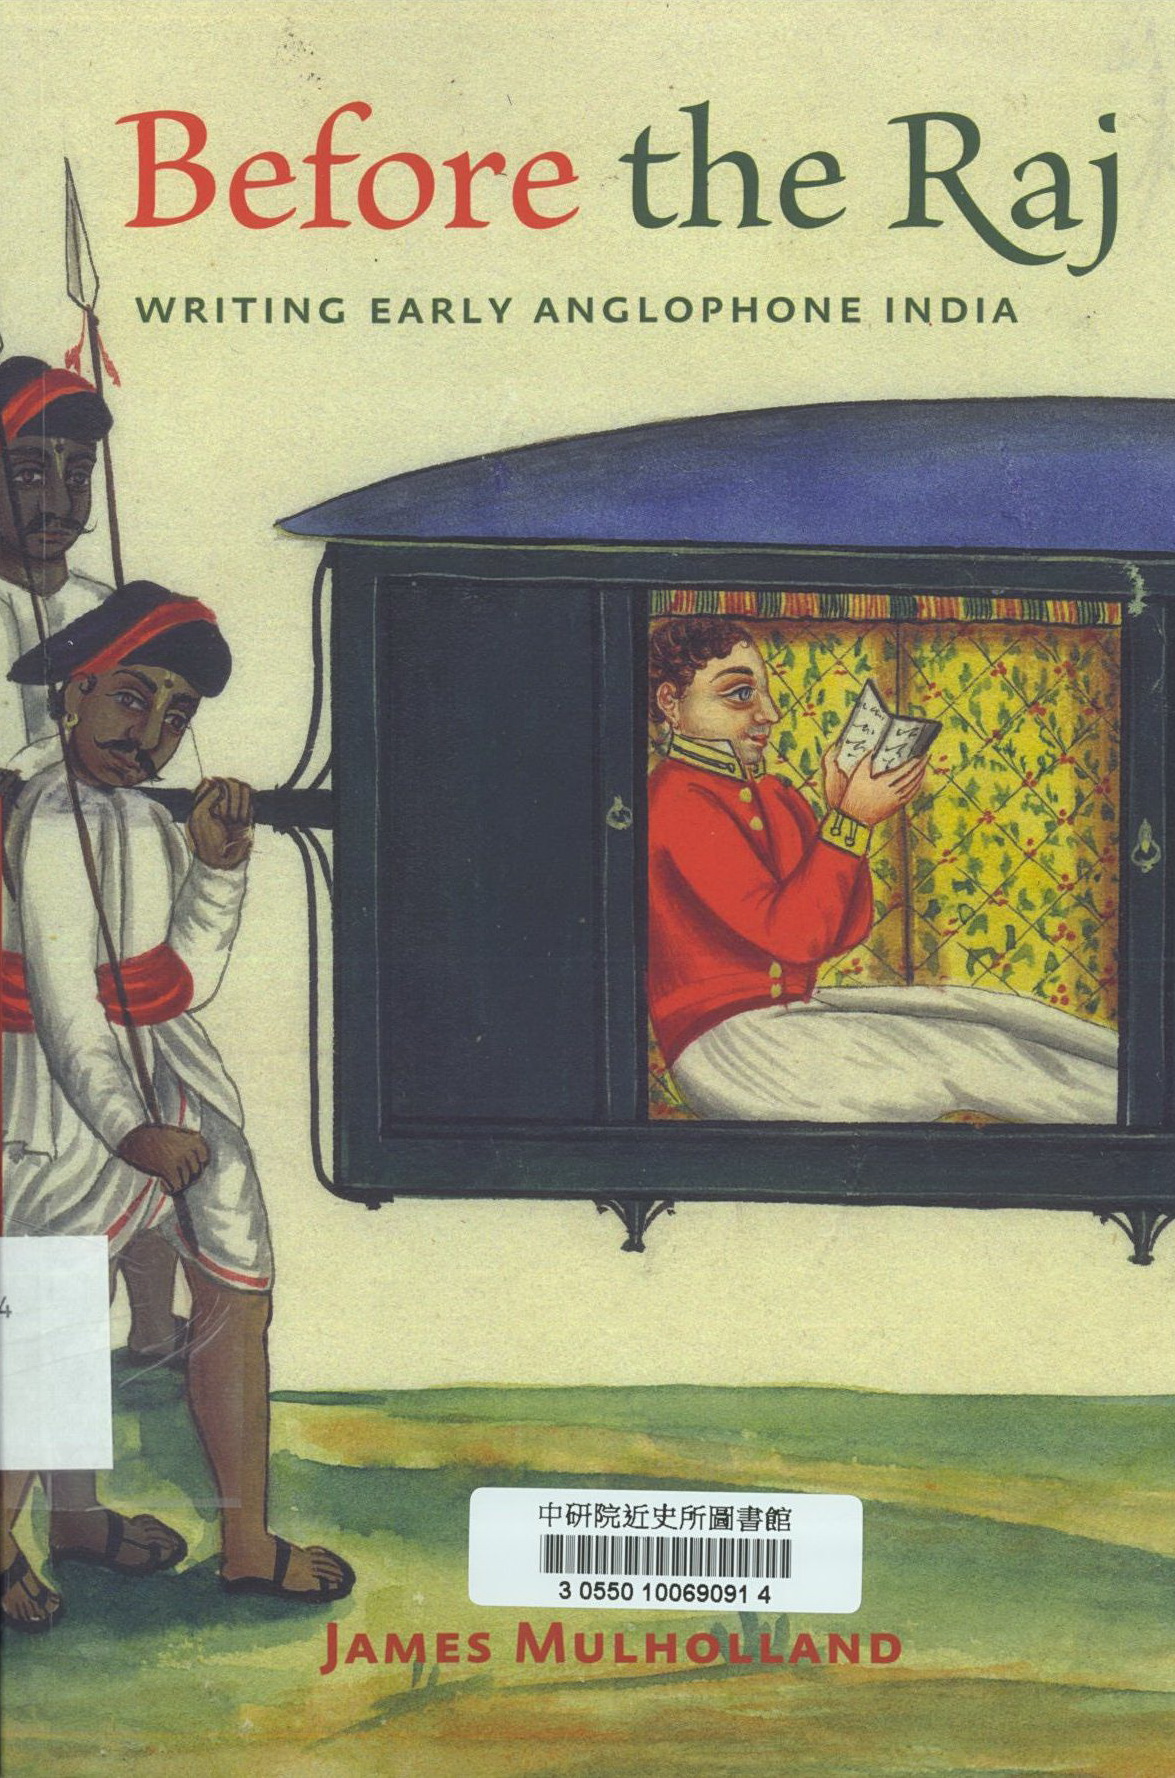 Before the raj : writing early Anglophone India